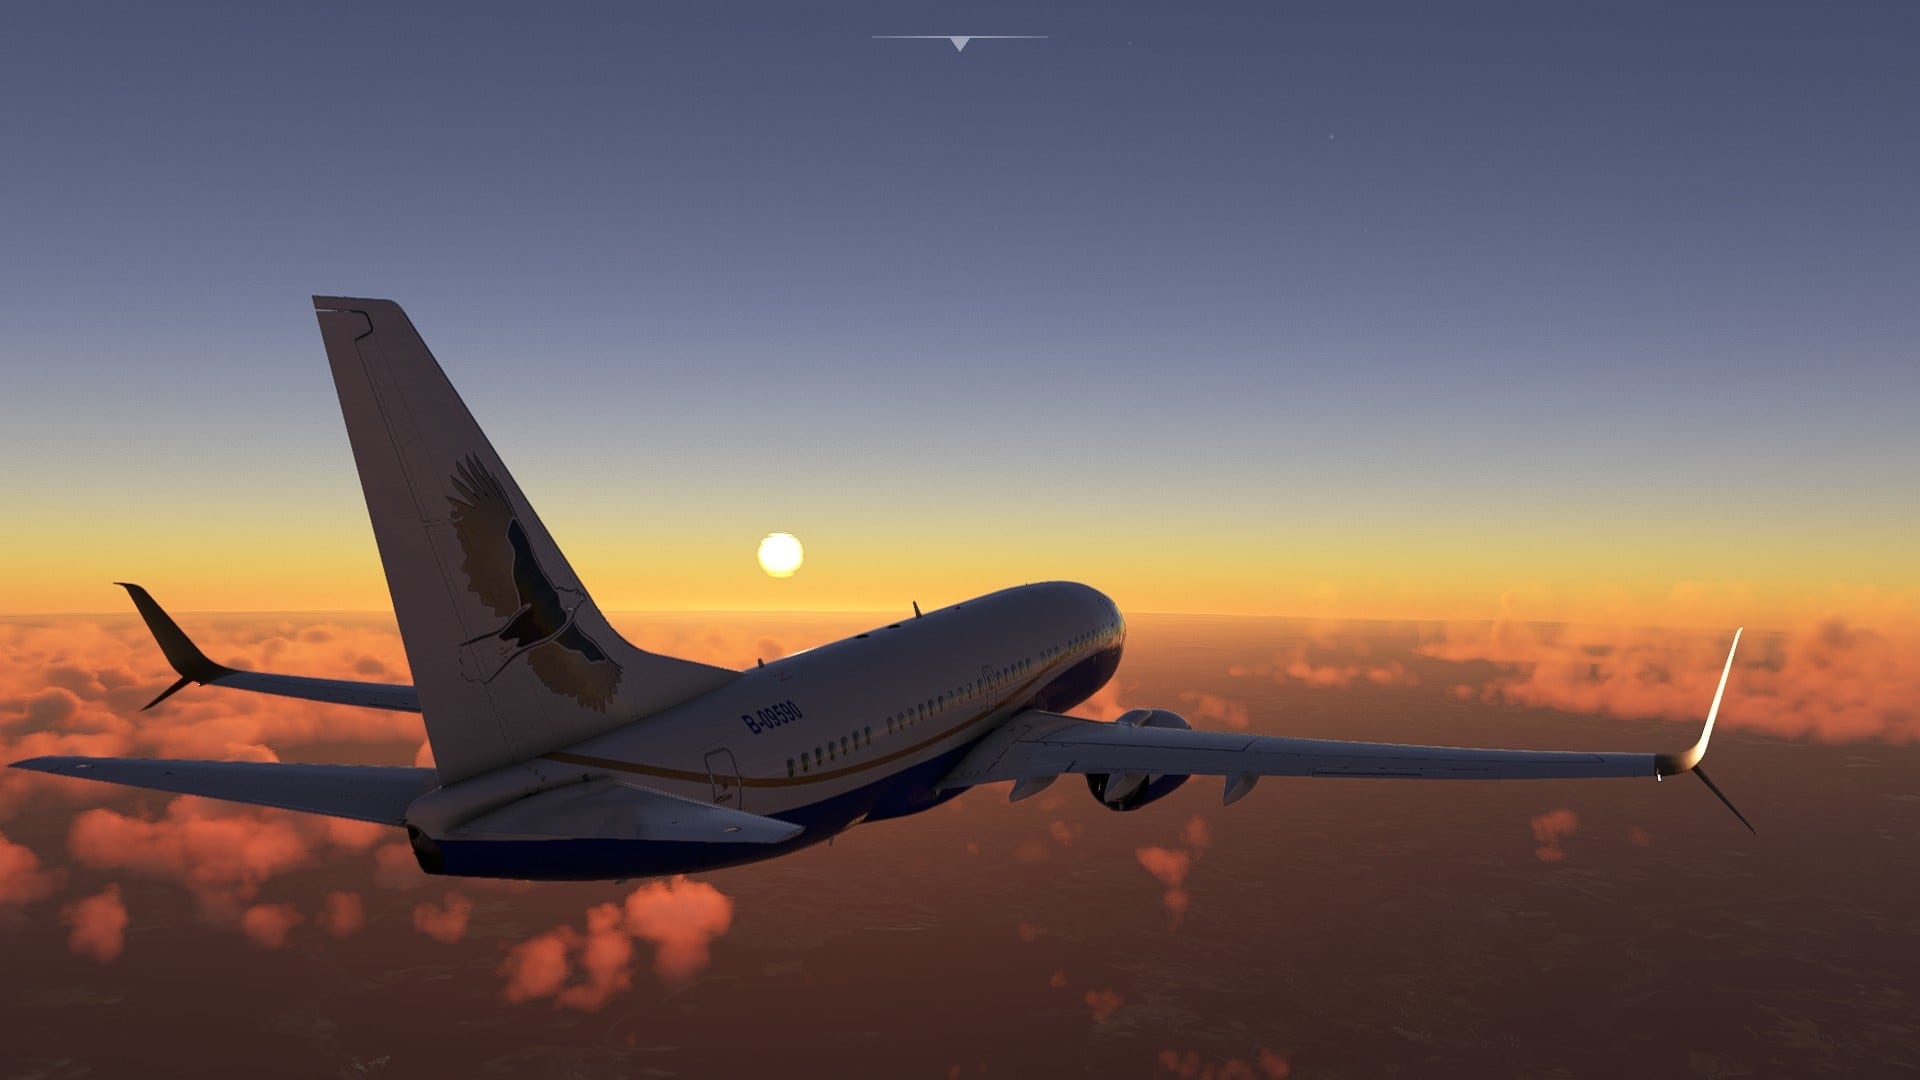 (Flight into the sunset over Munich.)